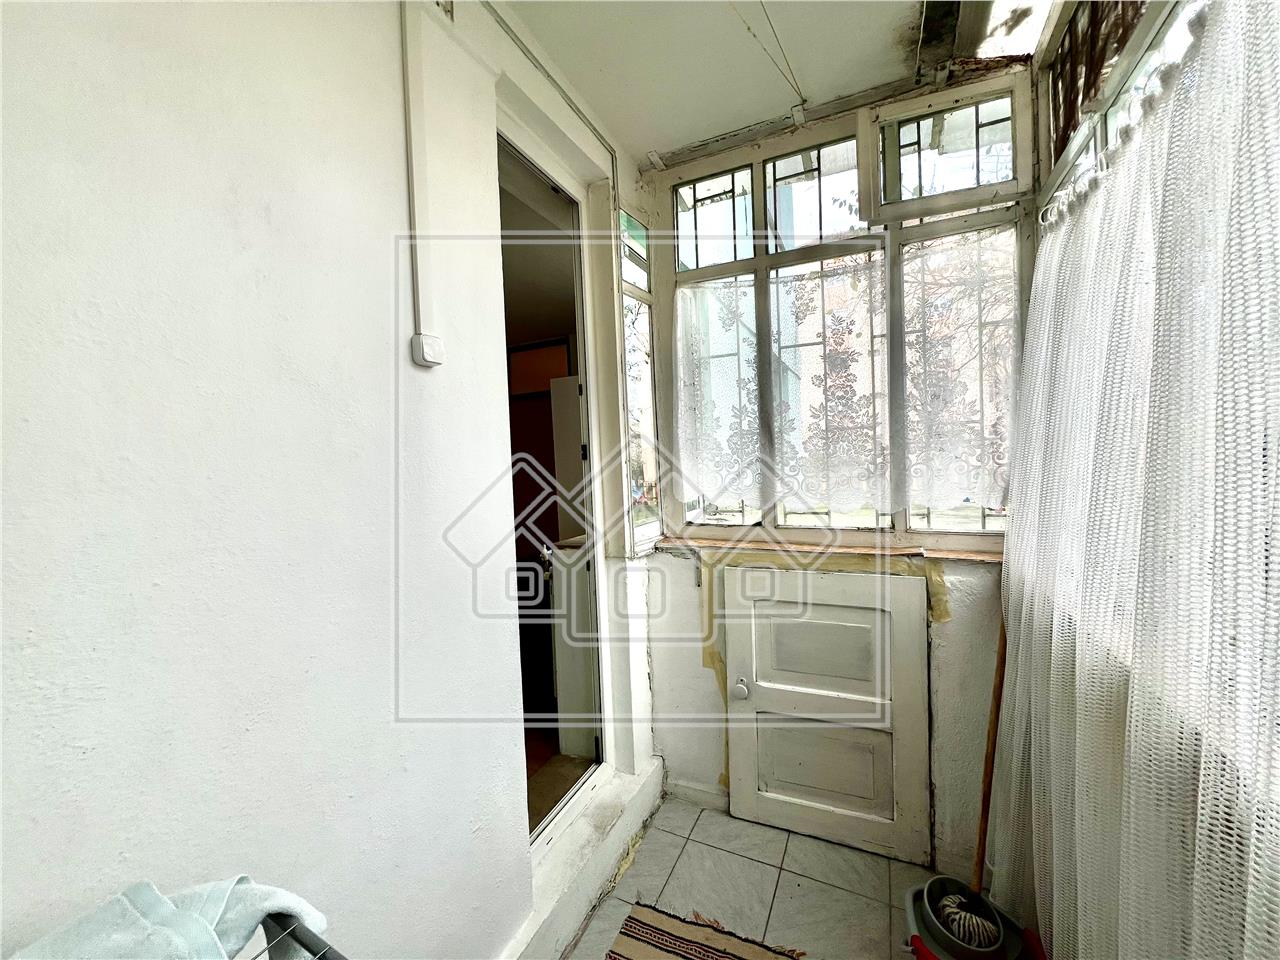 Apartament de vanzare in Sibiu- 2 camere, bucatarie separata  -Cedonia